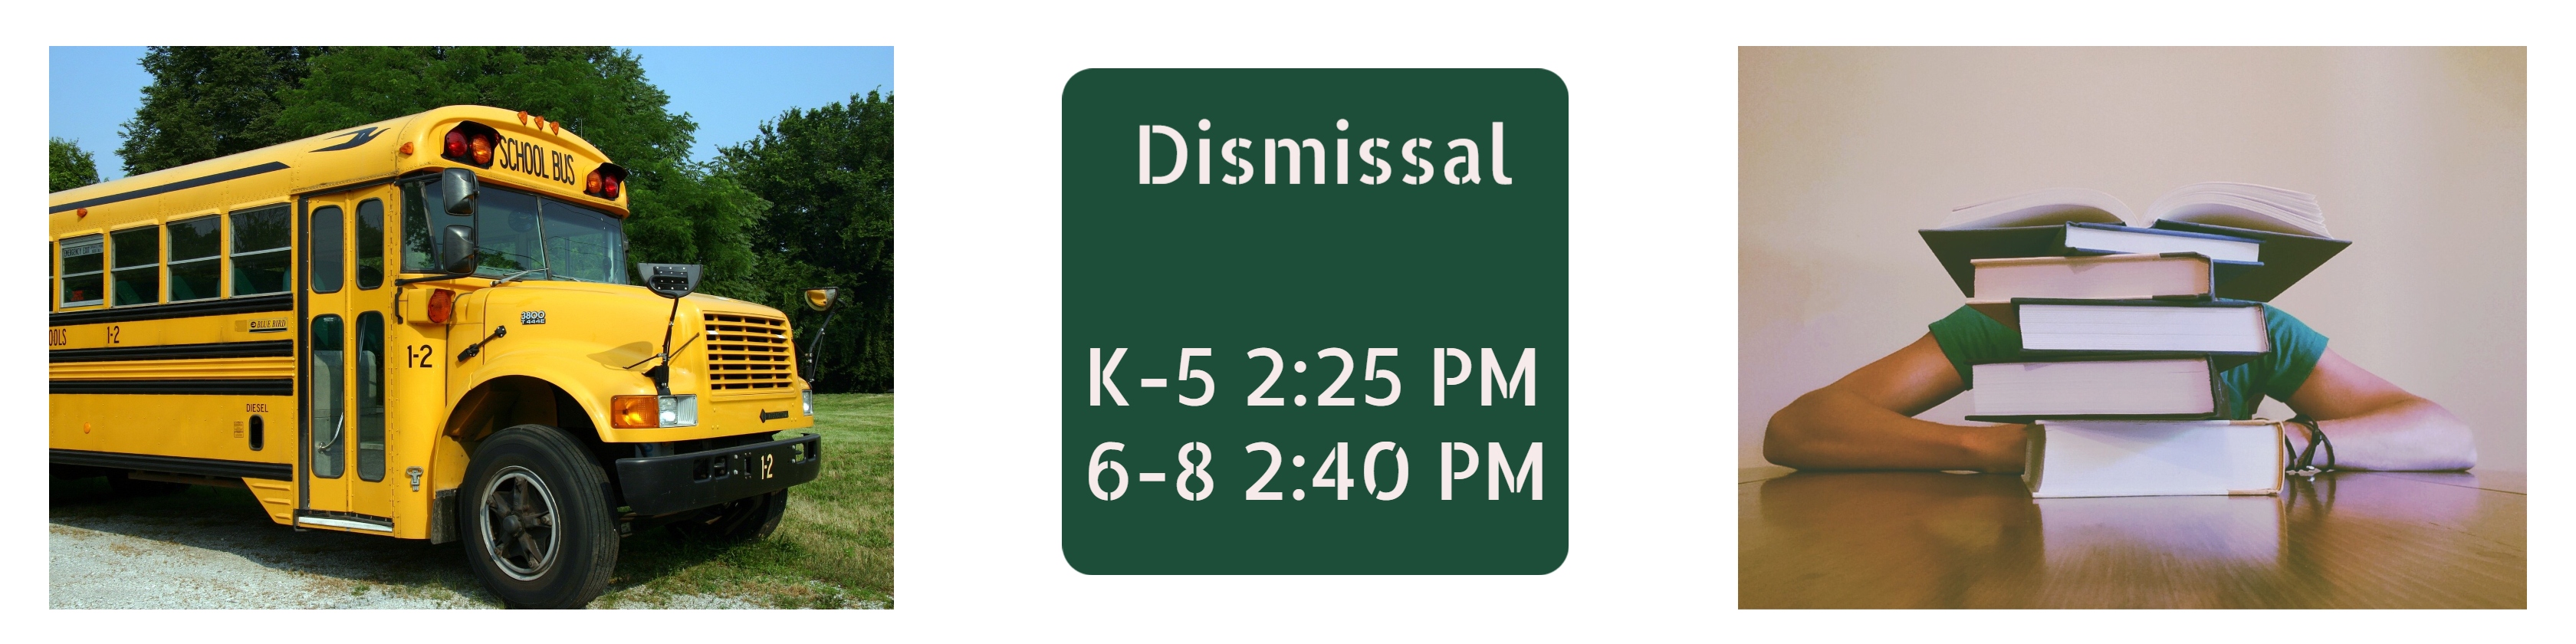 Dismissal Heading